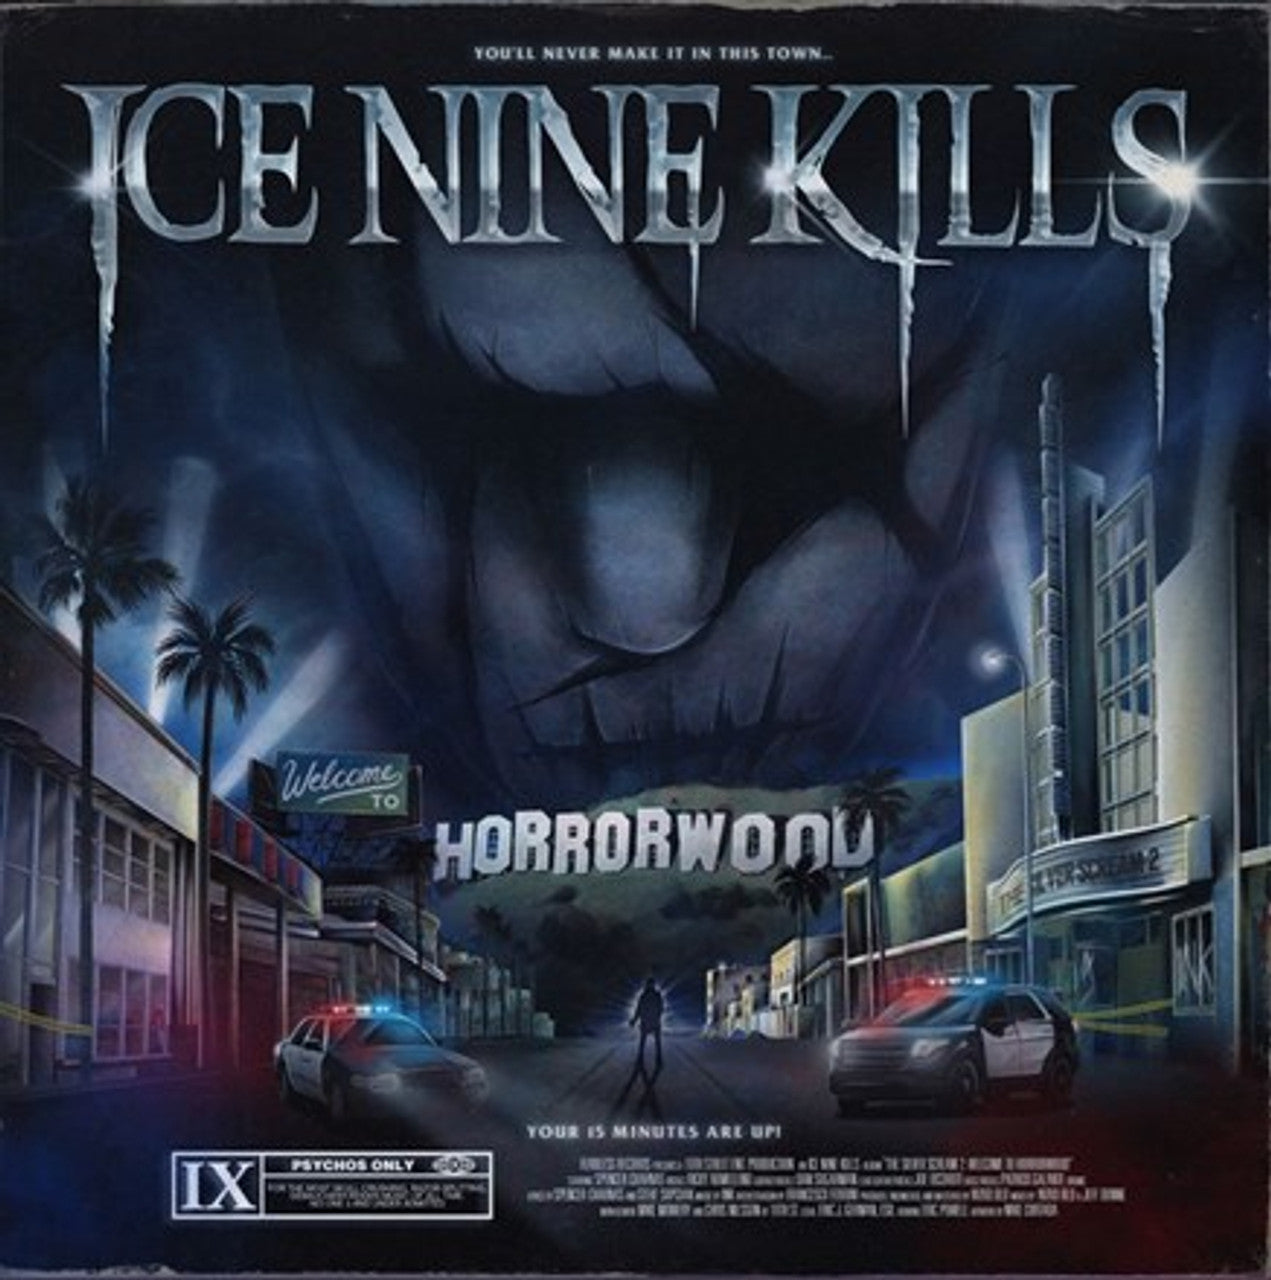 ICE NINE KILLS - THE SILVER SCREAM 2: WELCOME TO HORRORWOOD Vinyl 2xLP